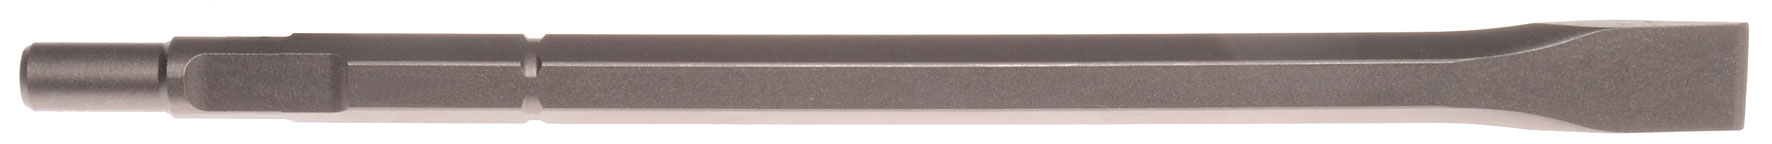 Flat chisel Shank 19 mm, hex / spline